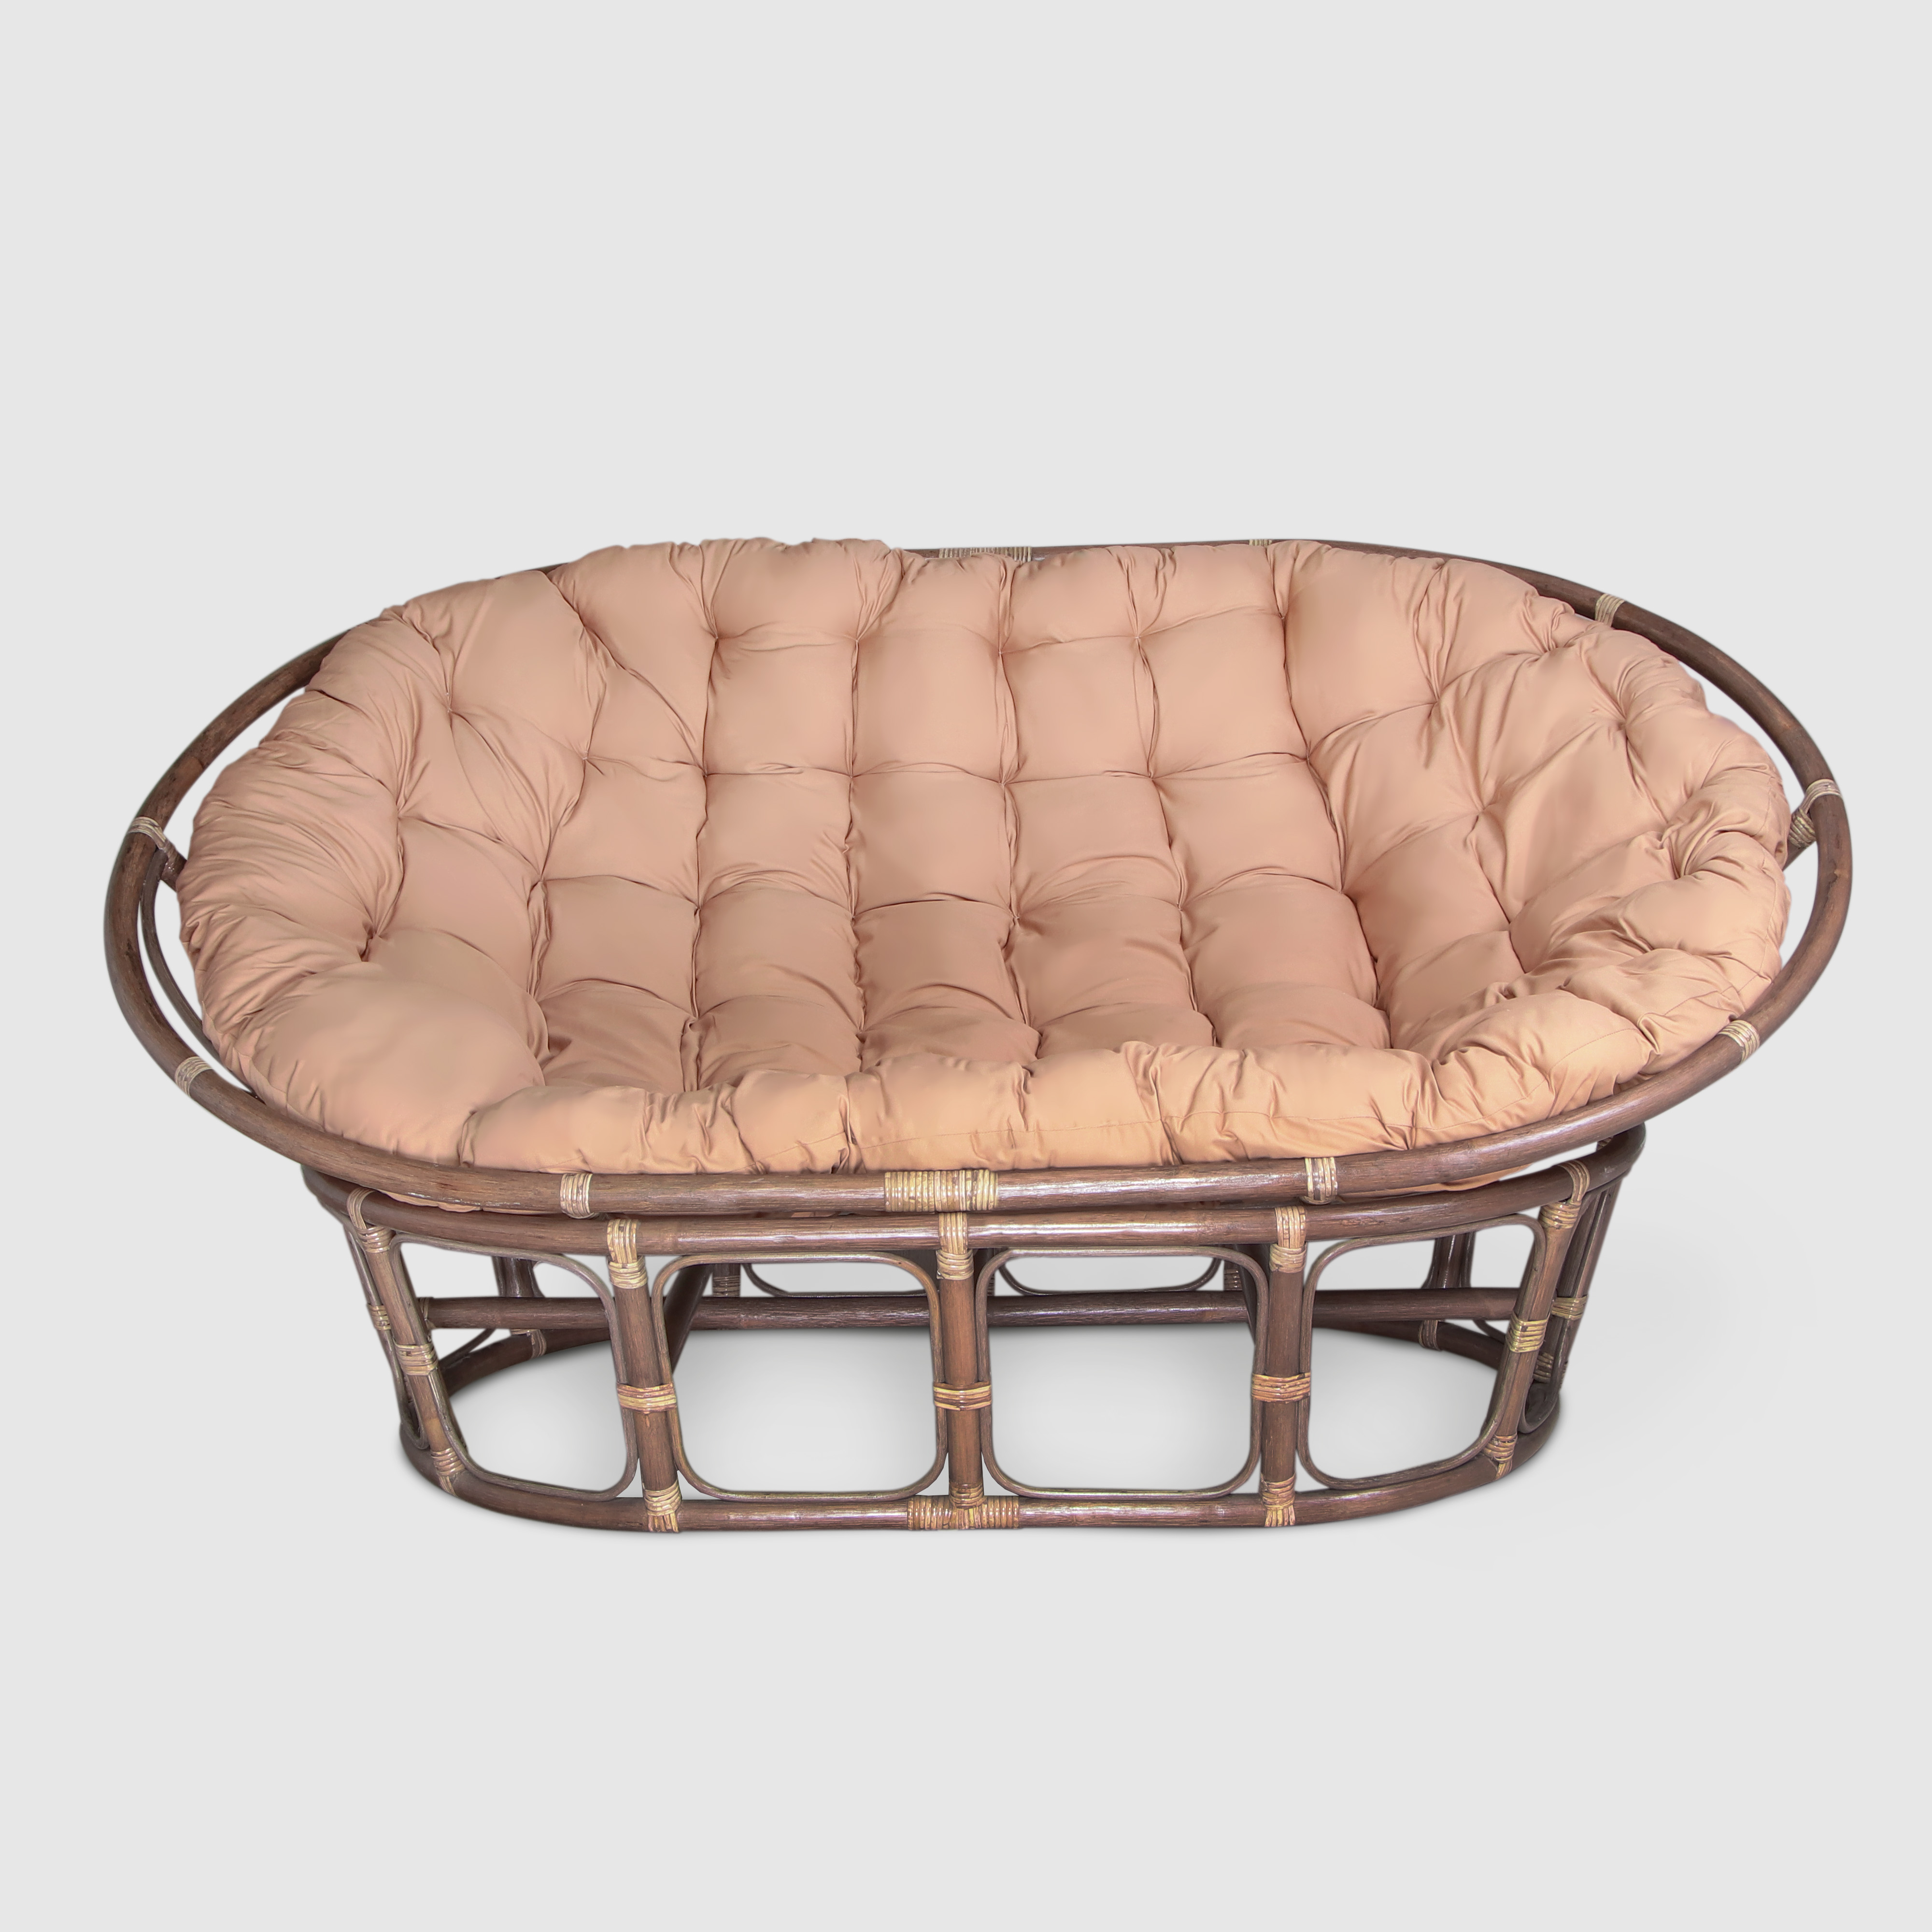 Кресло-мамасан Rattan Grand NIdo Brown с подушкой 175х110х94 см, цвет коричневый - фото 1